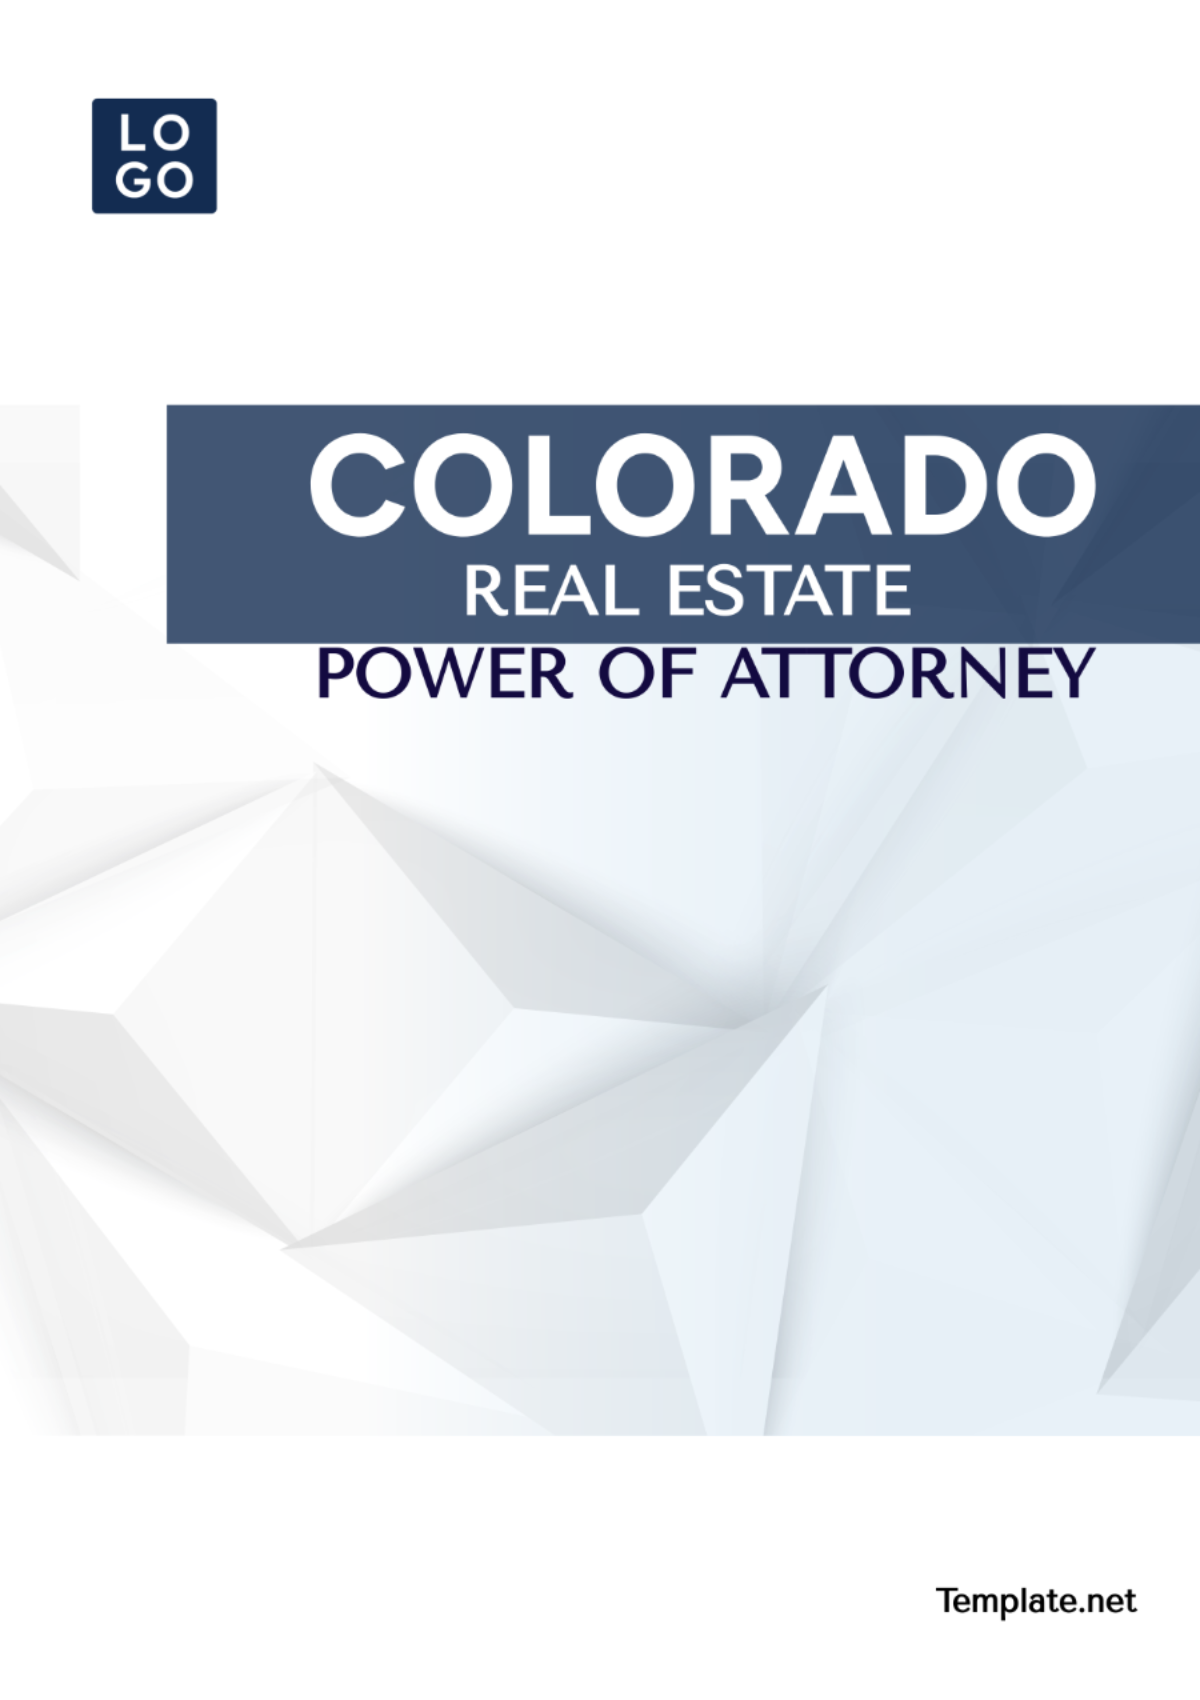 Colorado Real Estate Power of Attorney Template